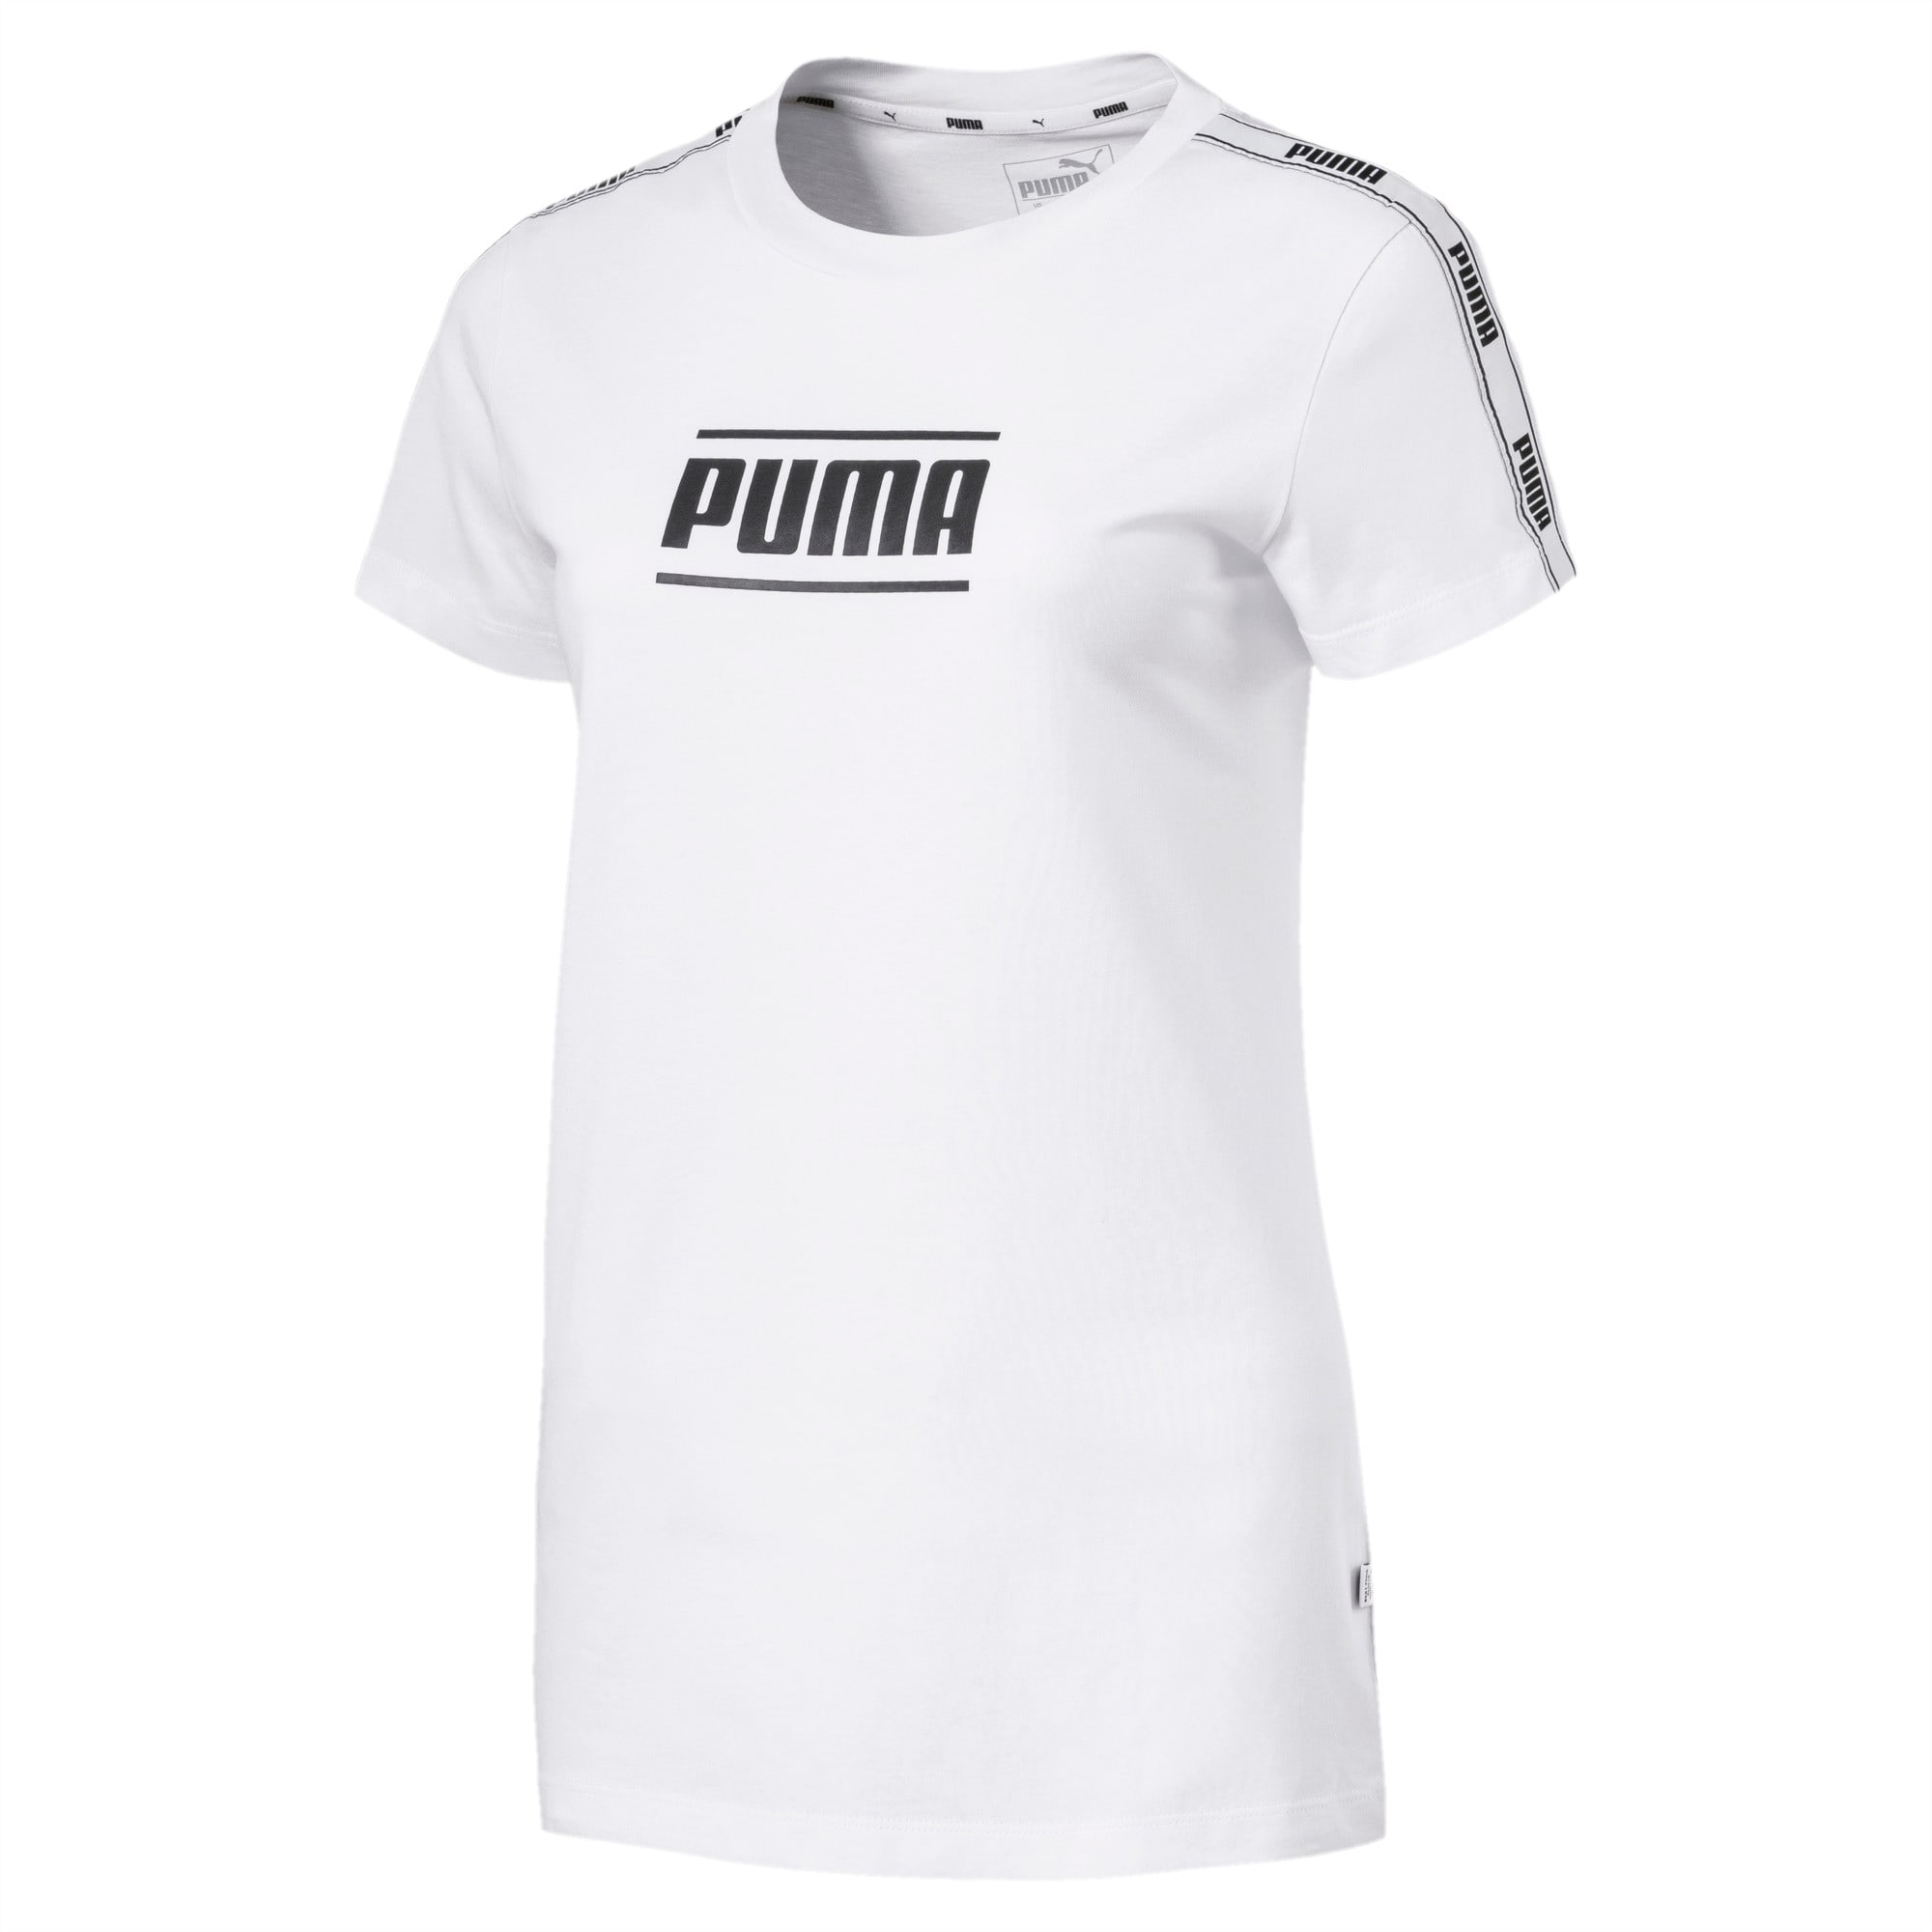 puma tape t shirt